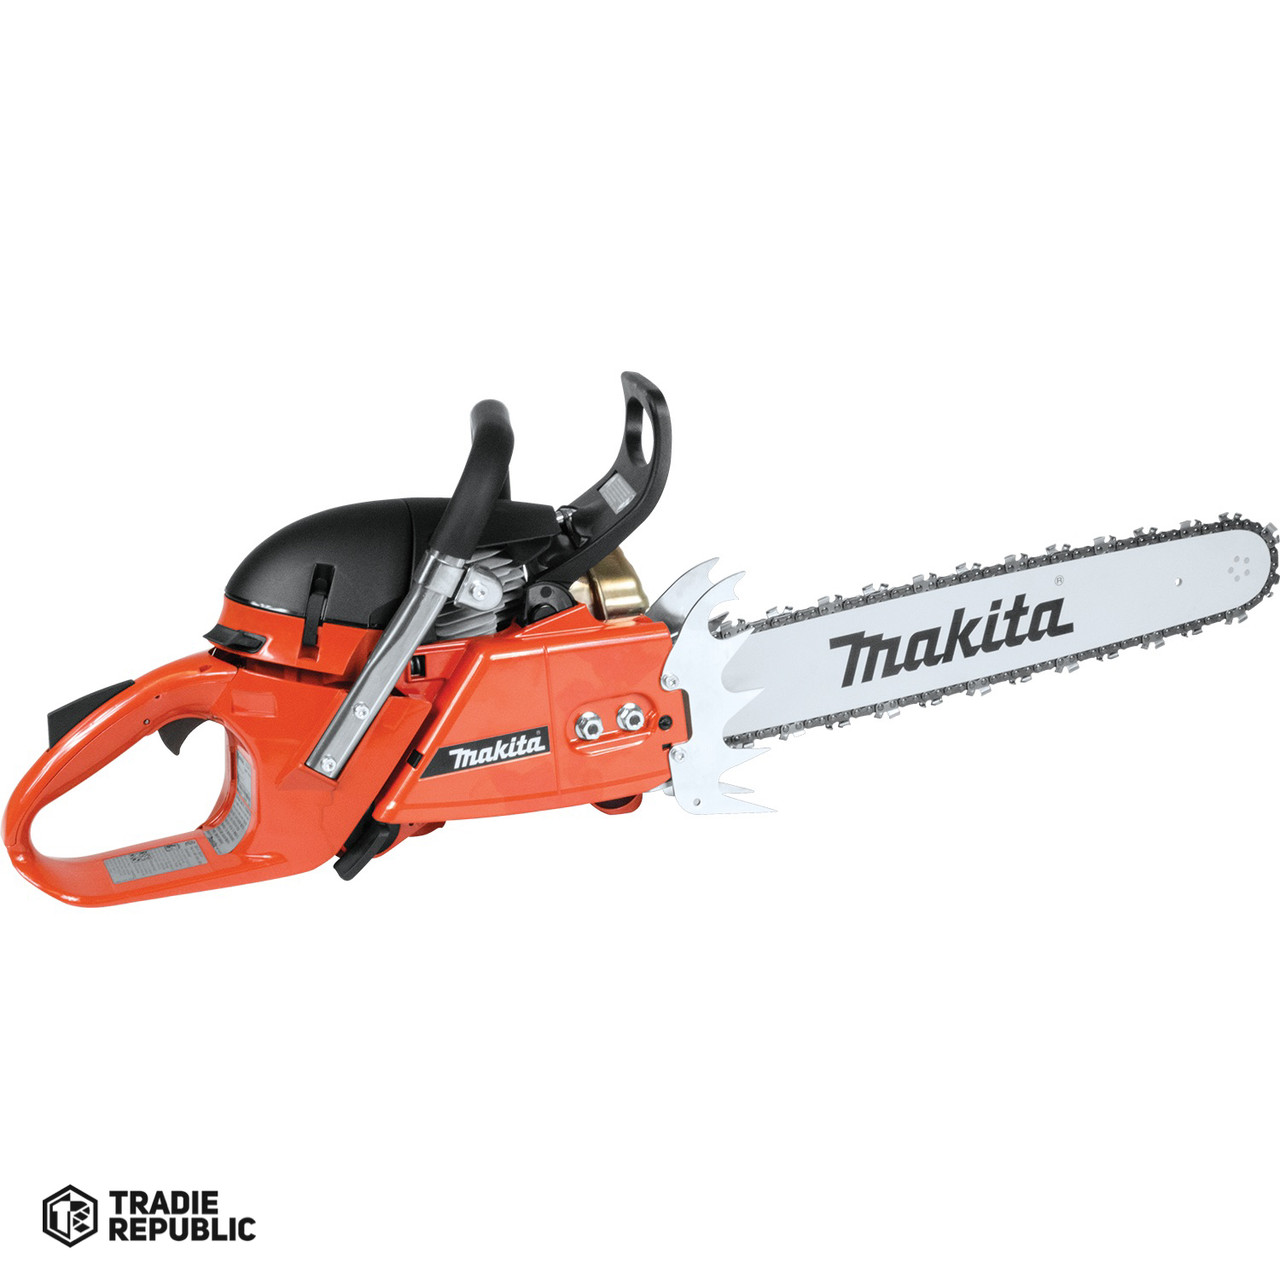 EA7300PRZ Makita 73 cc Chain Saw, Power Head Only, Makita Orange